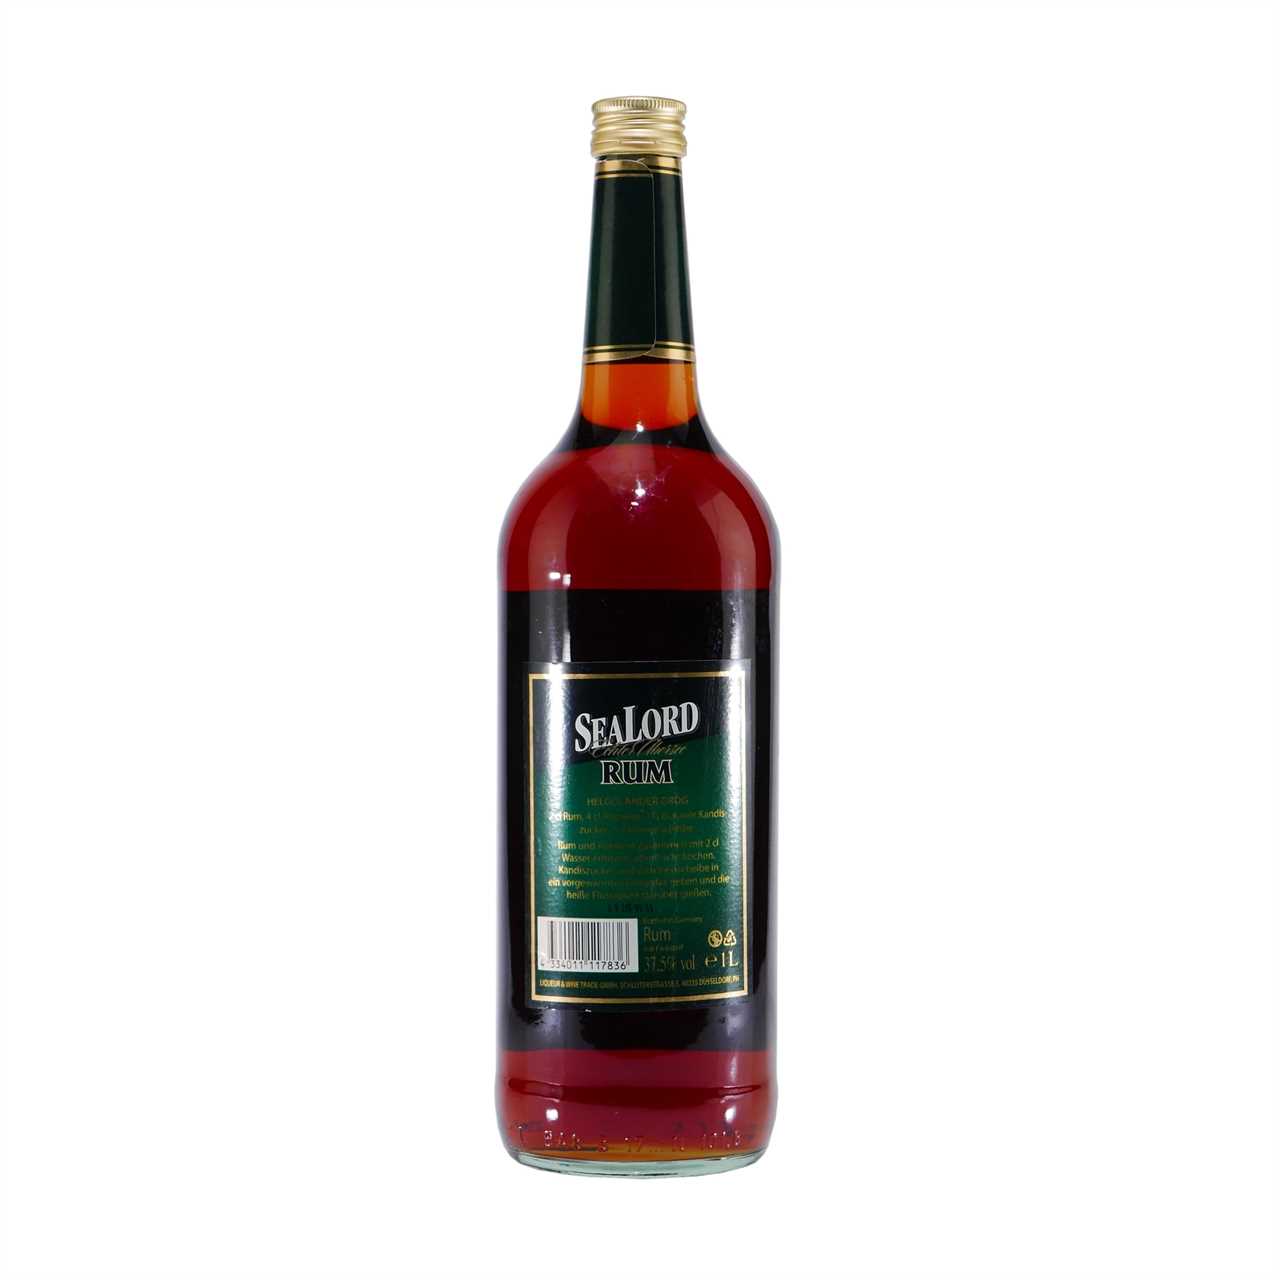 SEALORD Original Übersee Rum (6 x 1,0L)